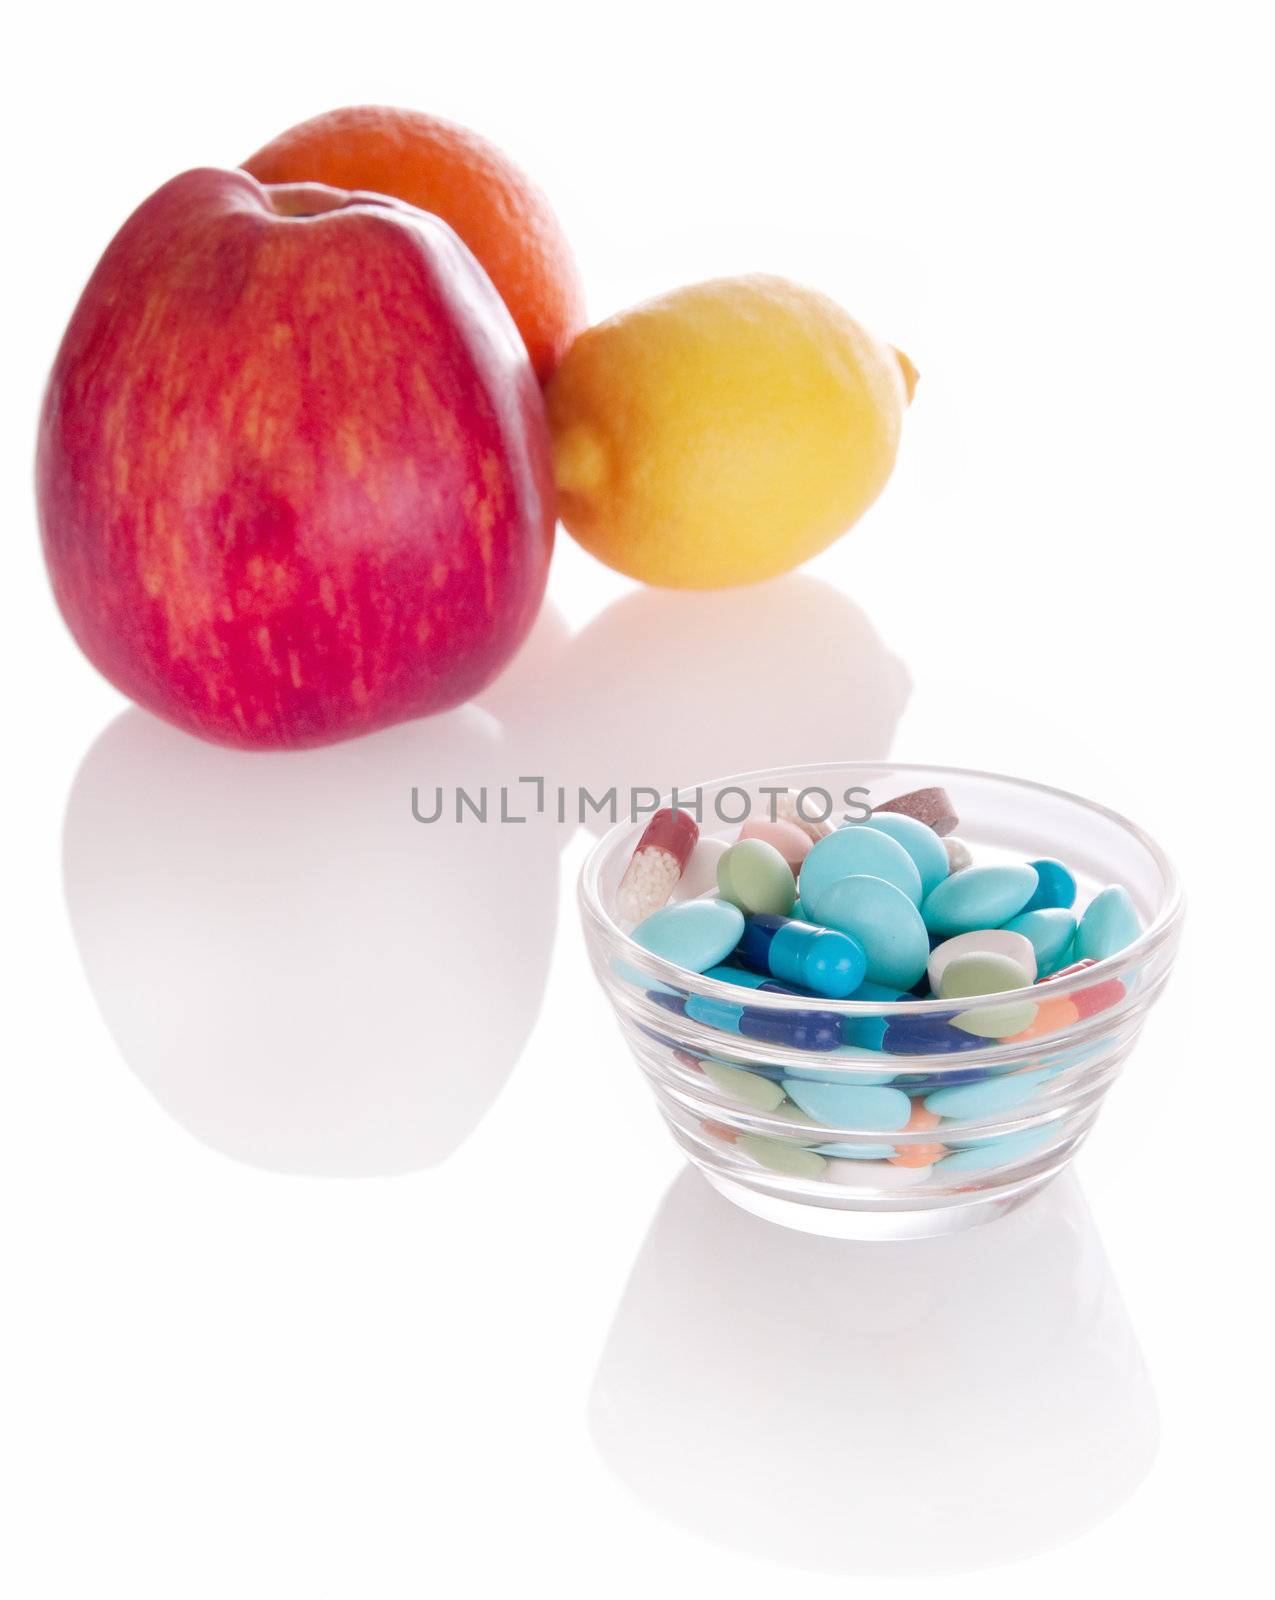 Concept of vitamin medicine by iryna_rasko